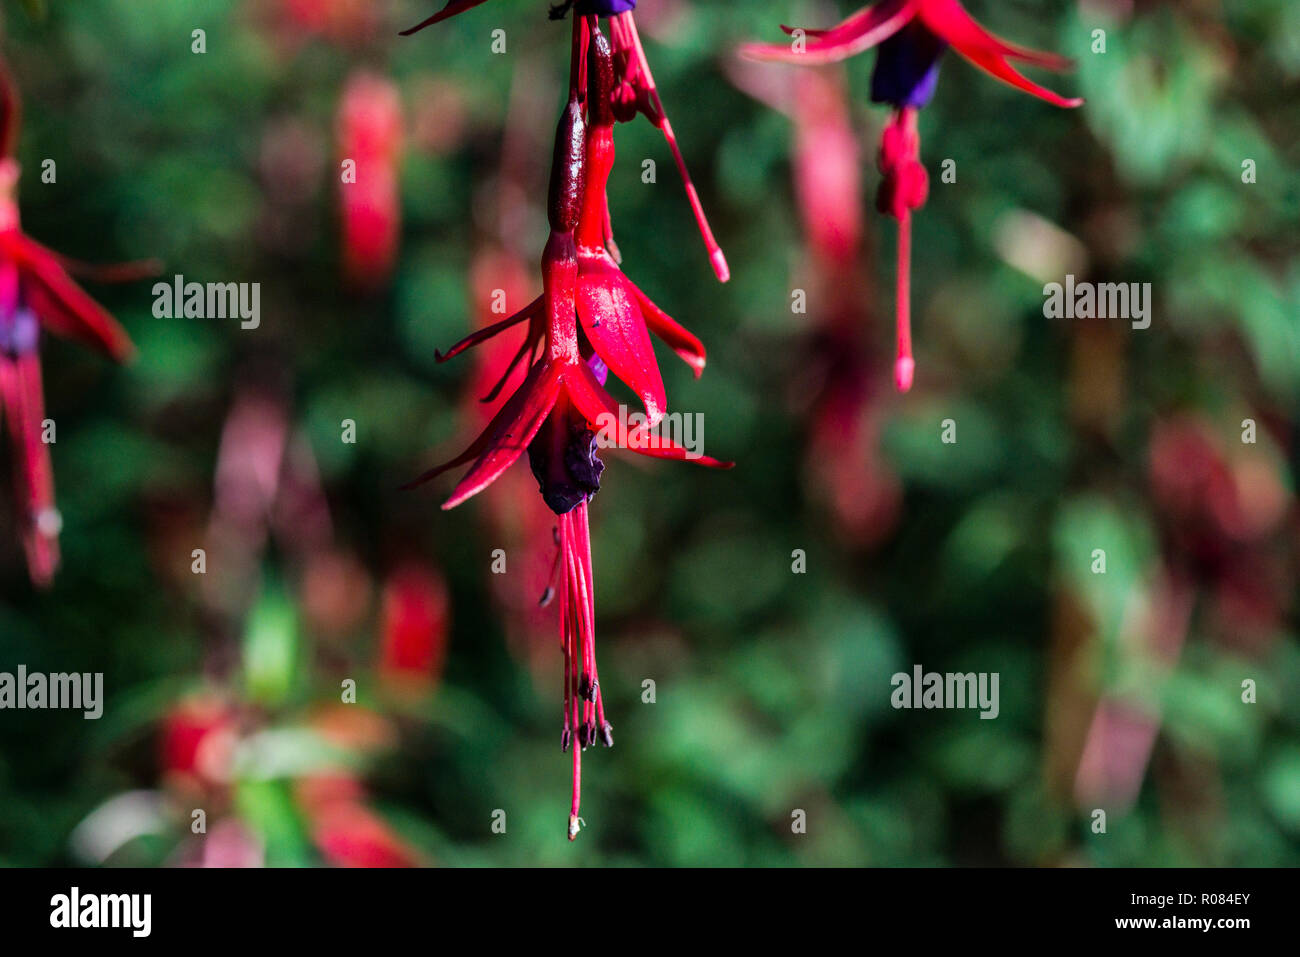 The pendulous teardrop shaped flowers of a fuchsia. Stock Photo